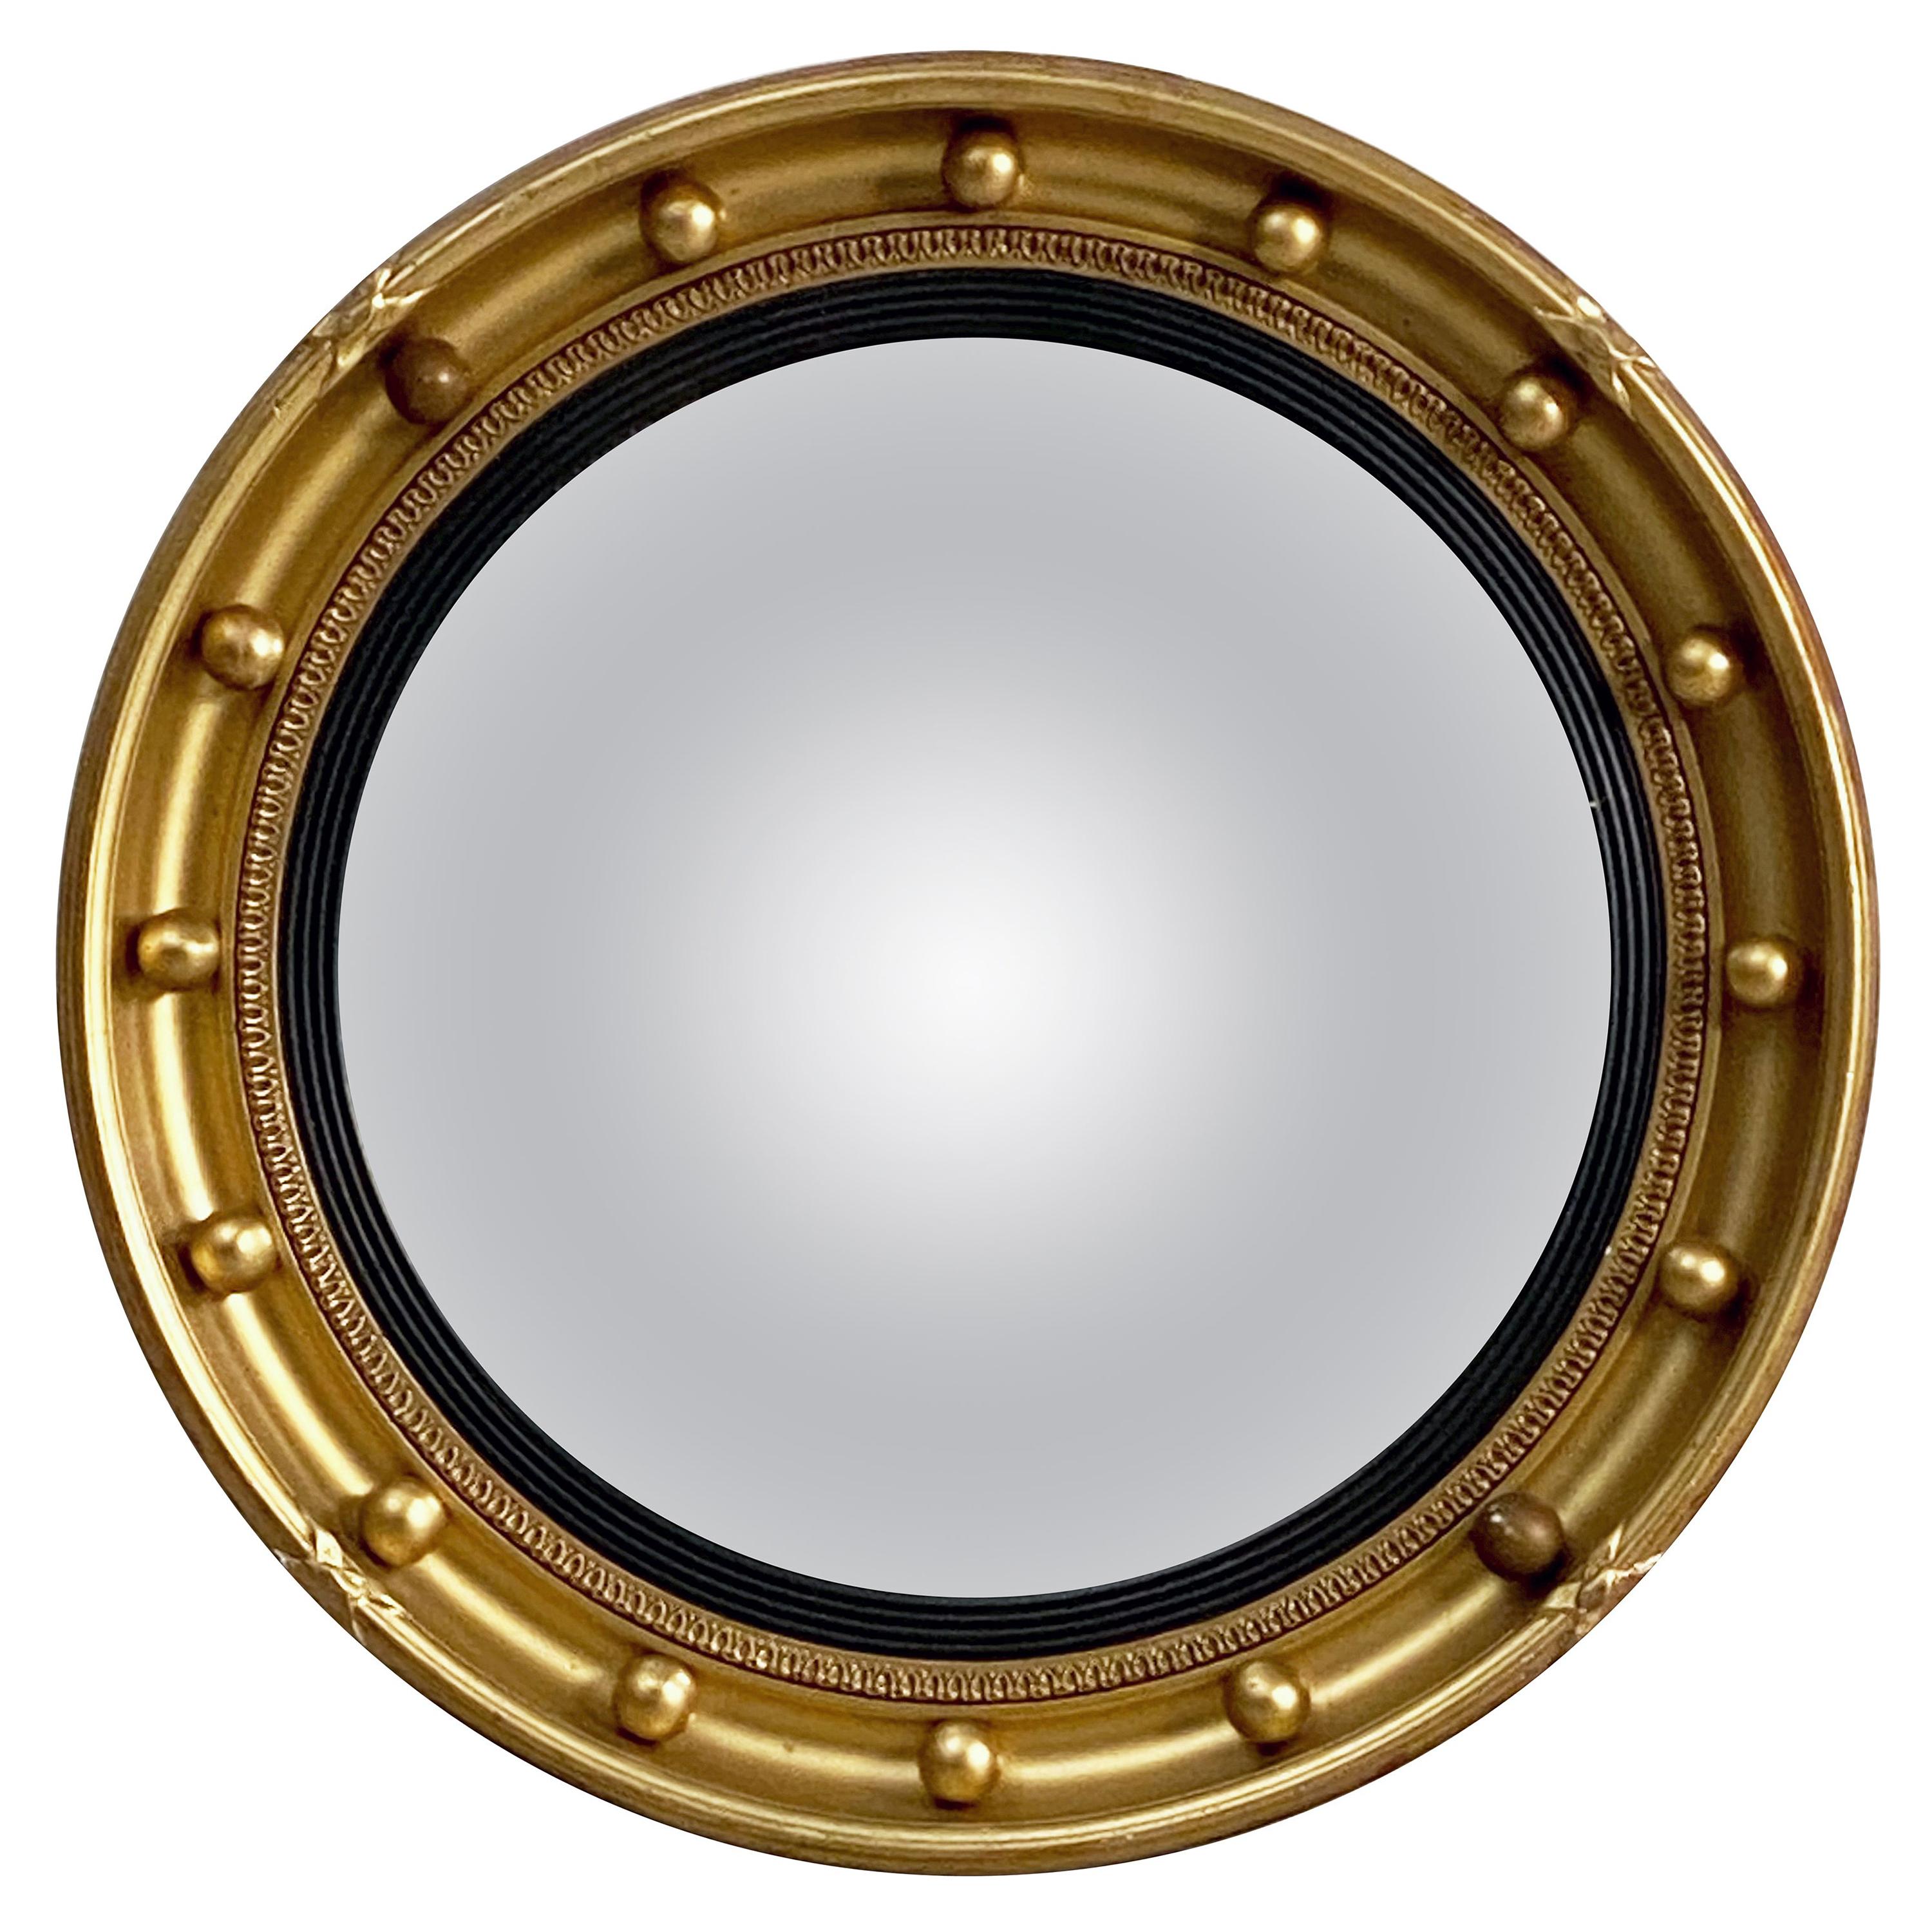 English Round Gilt Framed Convex Mirror (Dia 16 1/4)